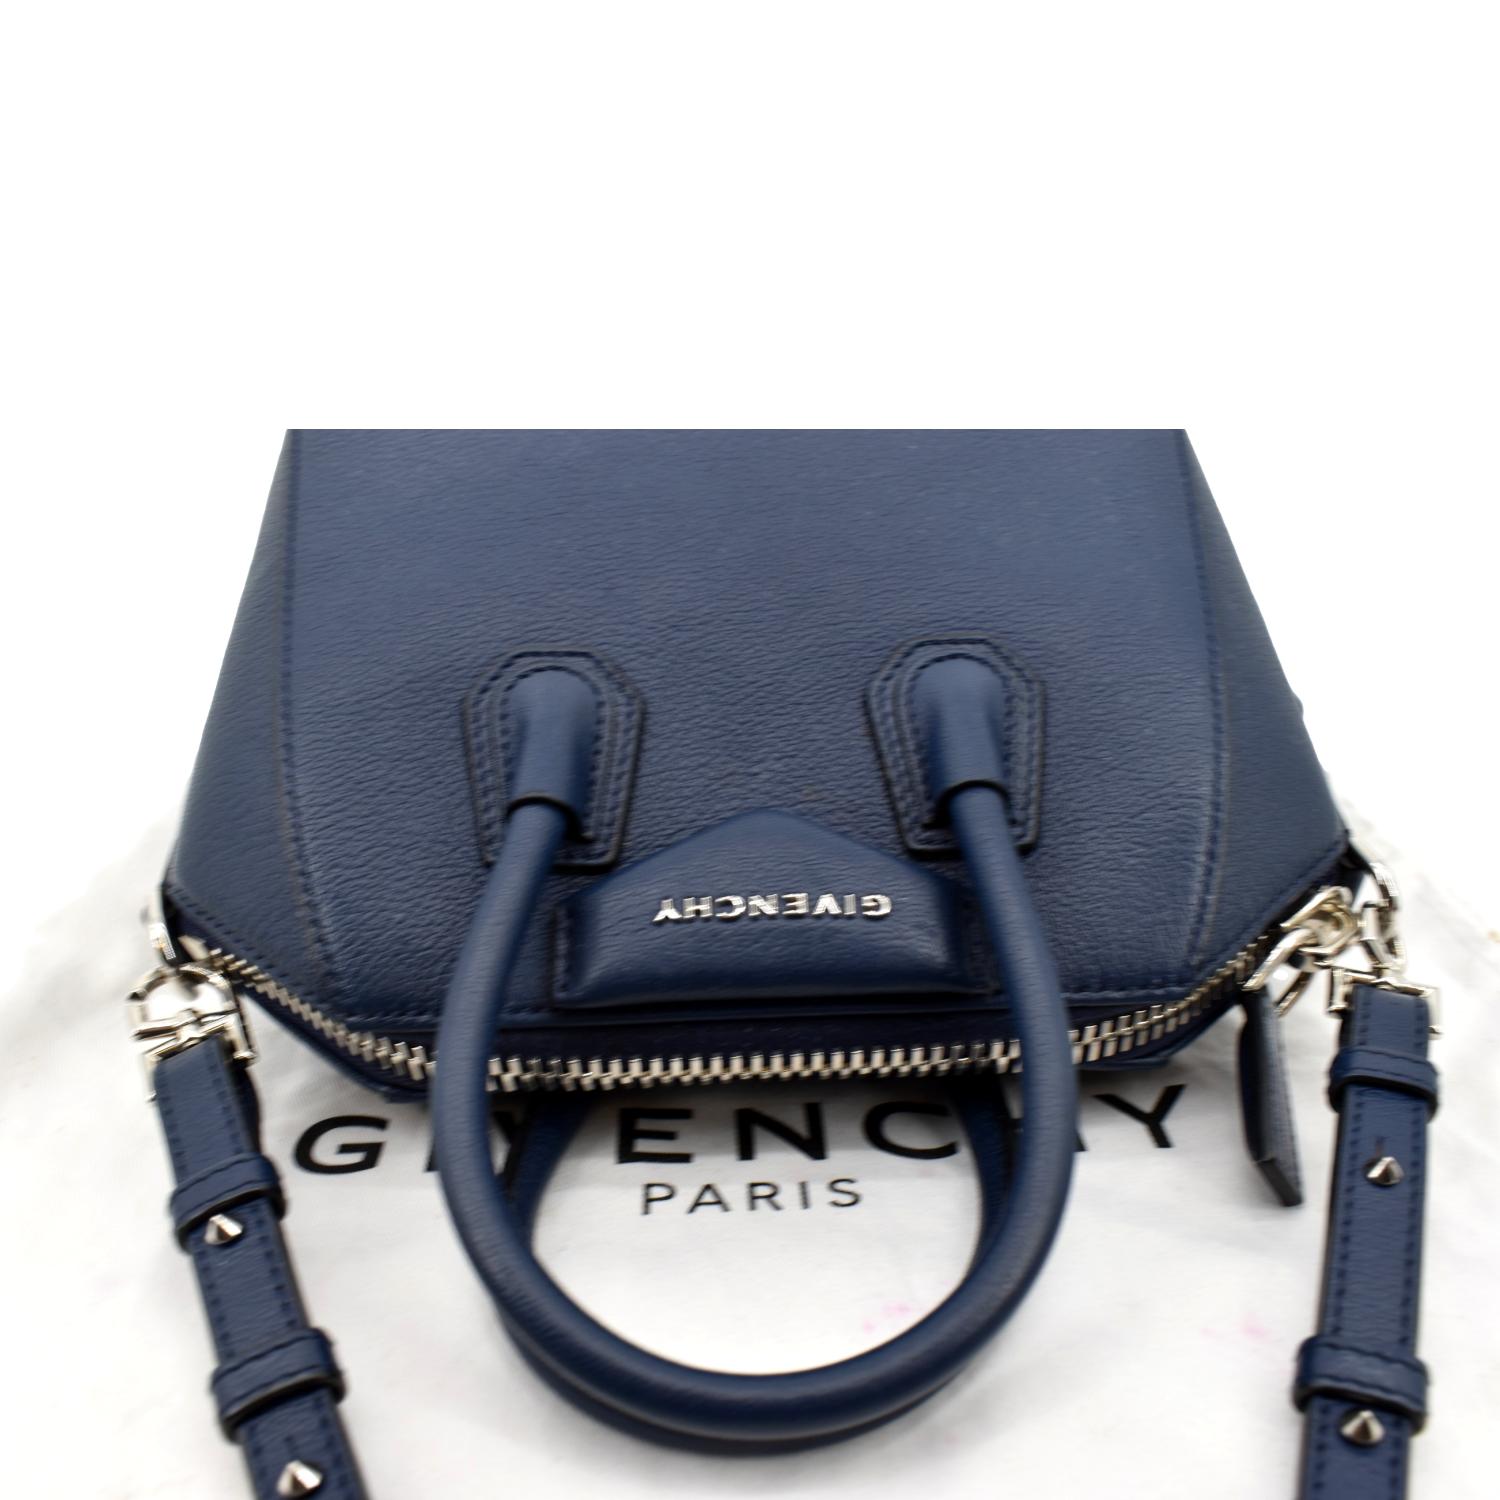 Givenchy Antigona Mini Grained Leather Bag